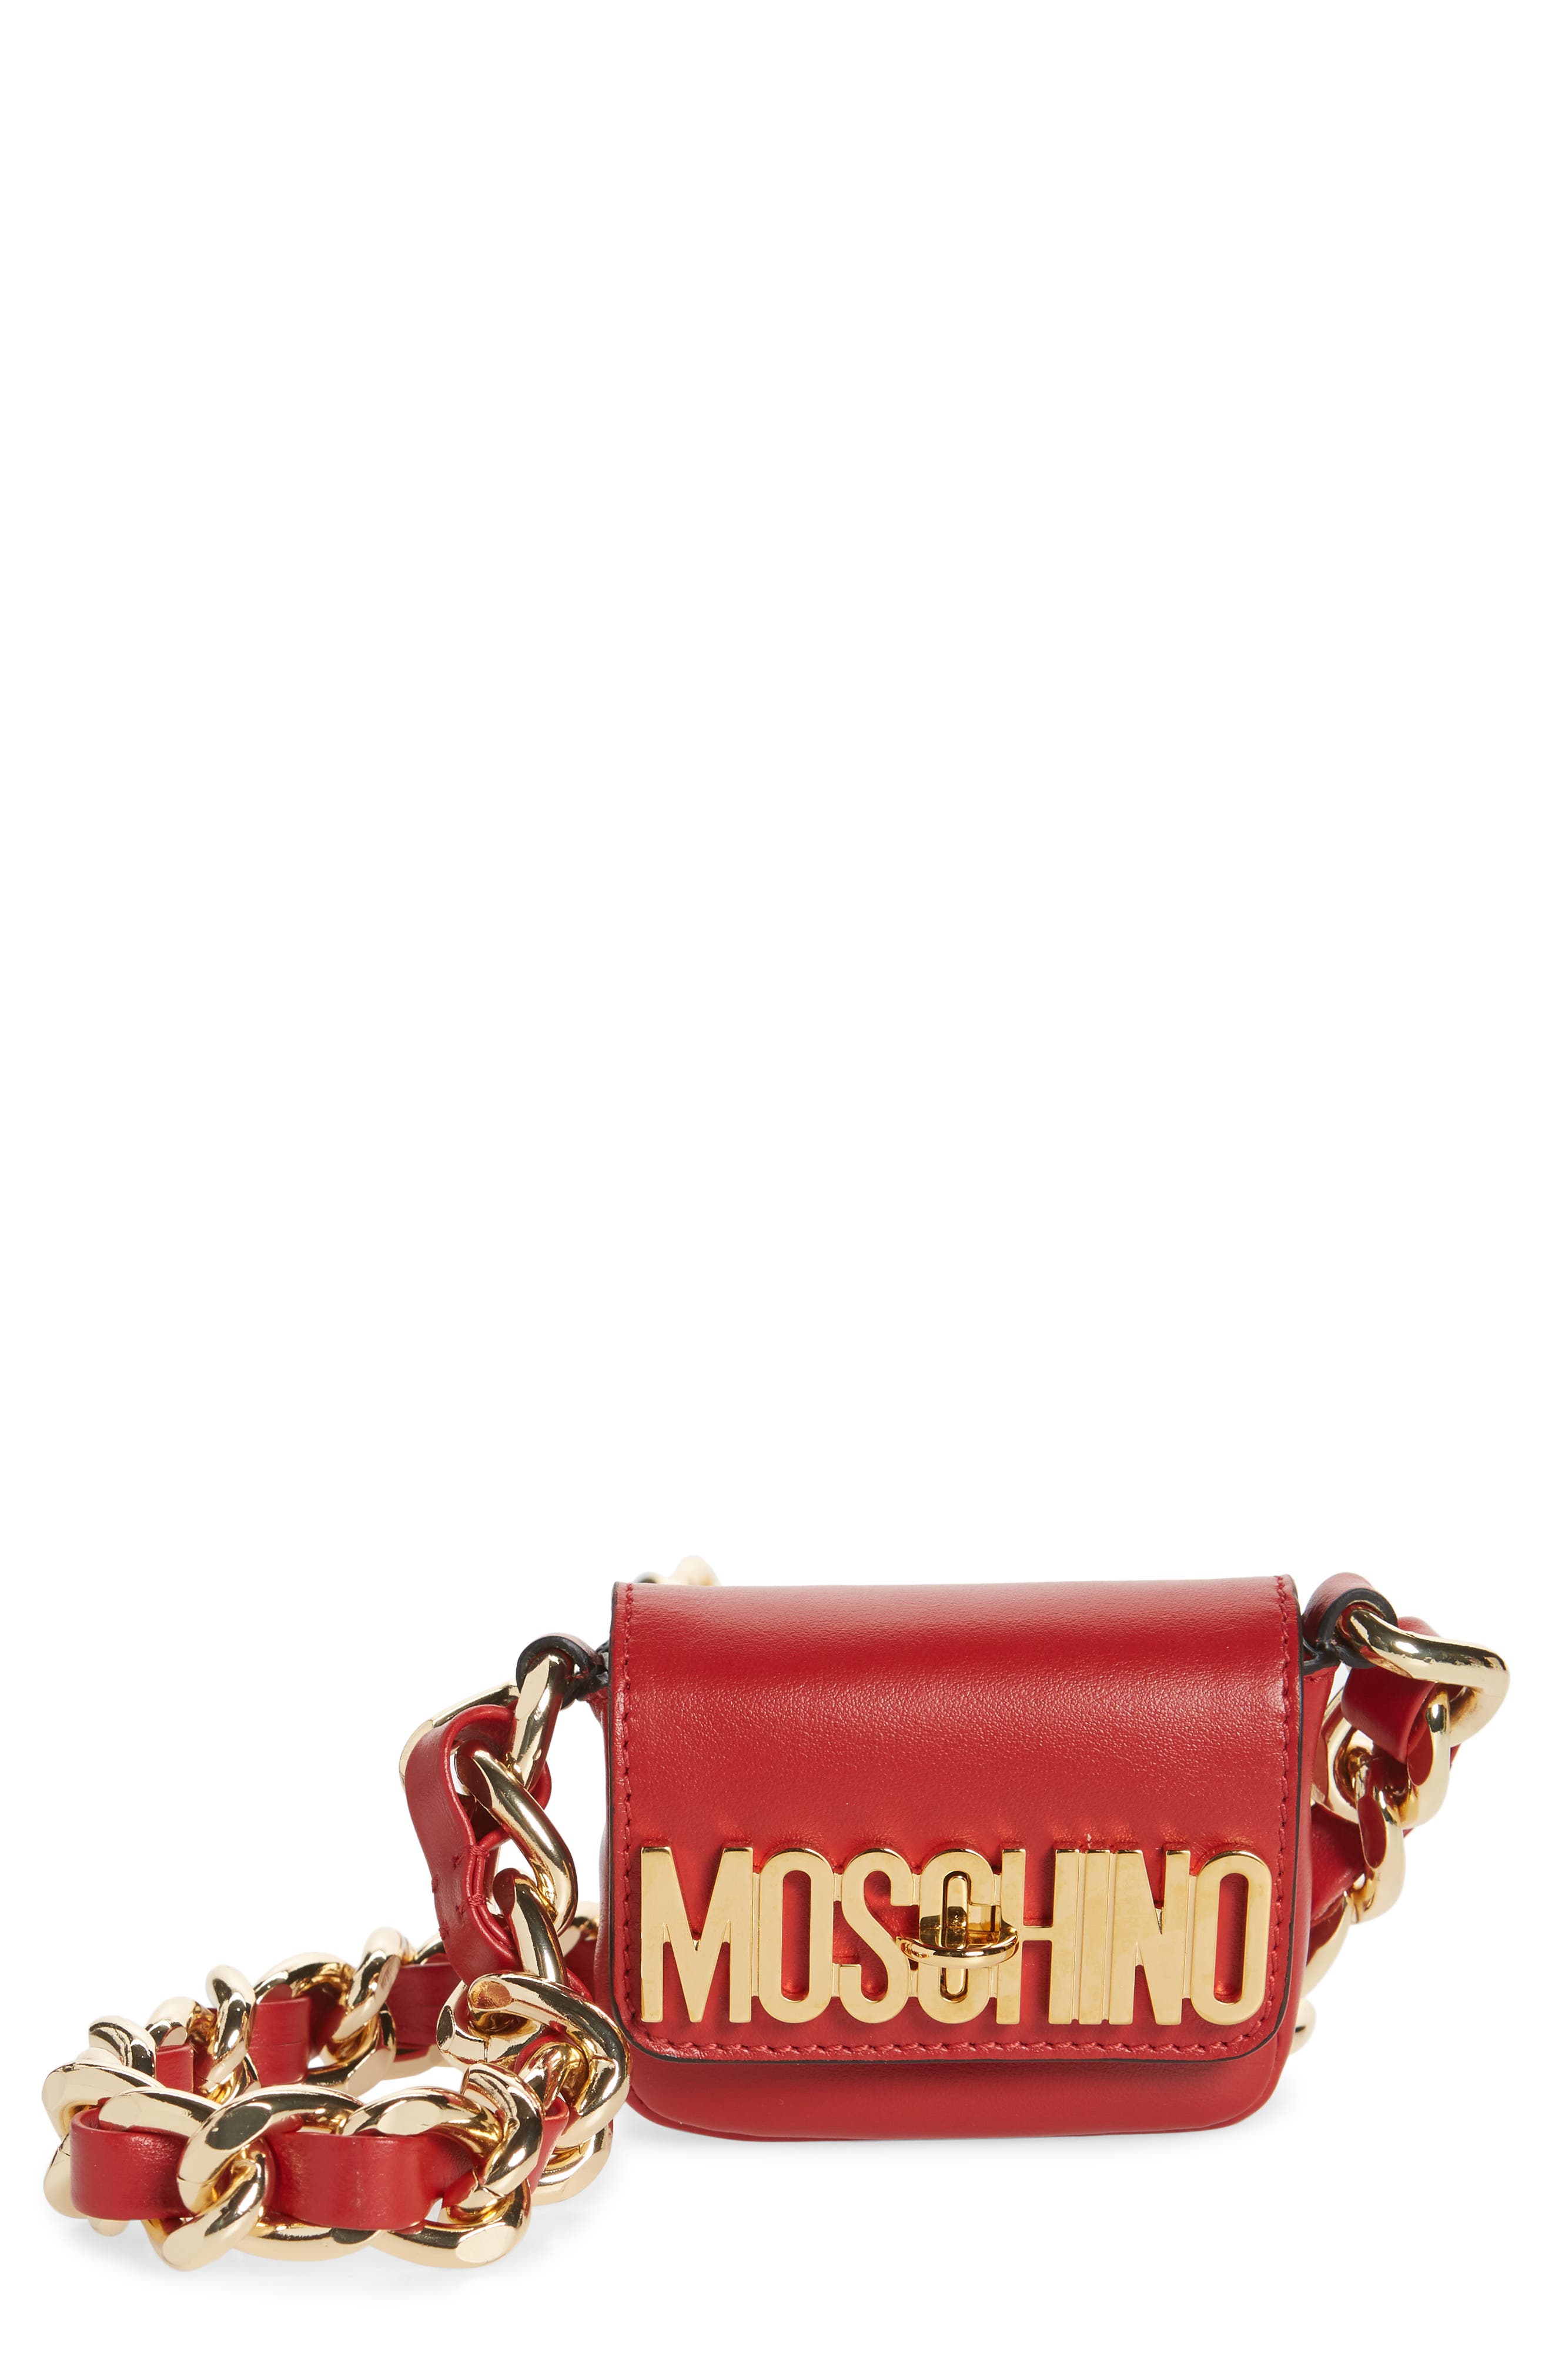 moschino purses